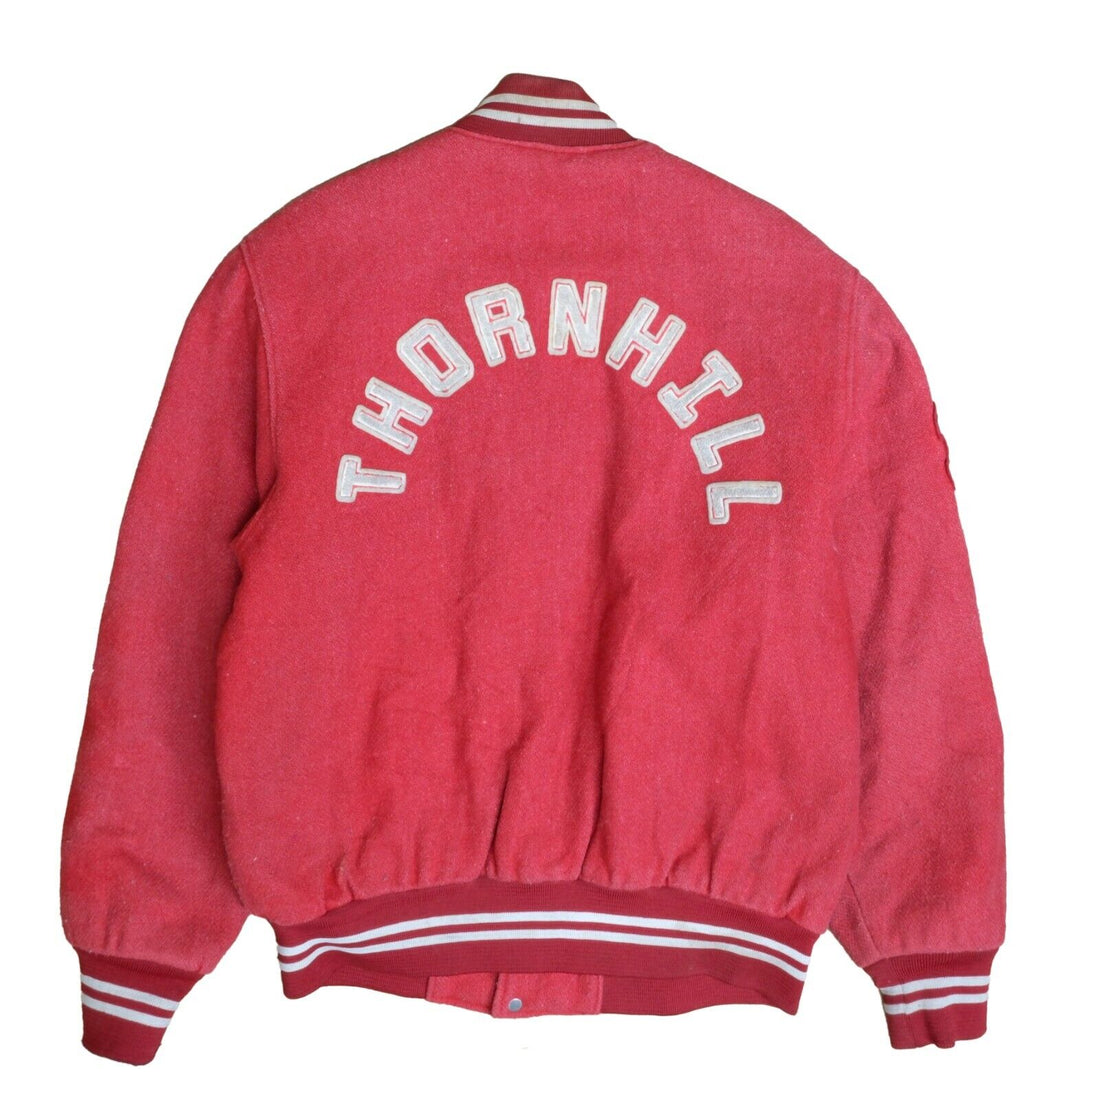 Vintage Thornhill Thunderbirds Wool Varsity Jacket Size Medium